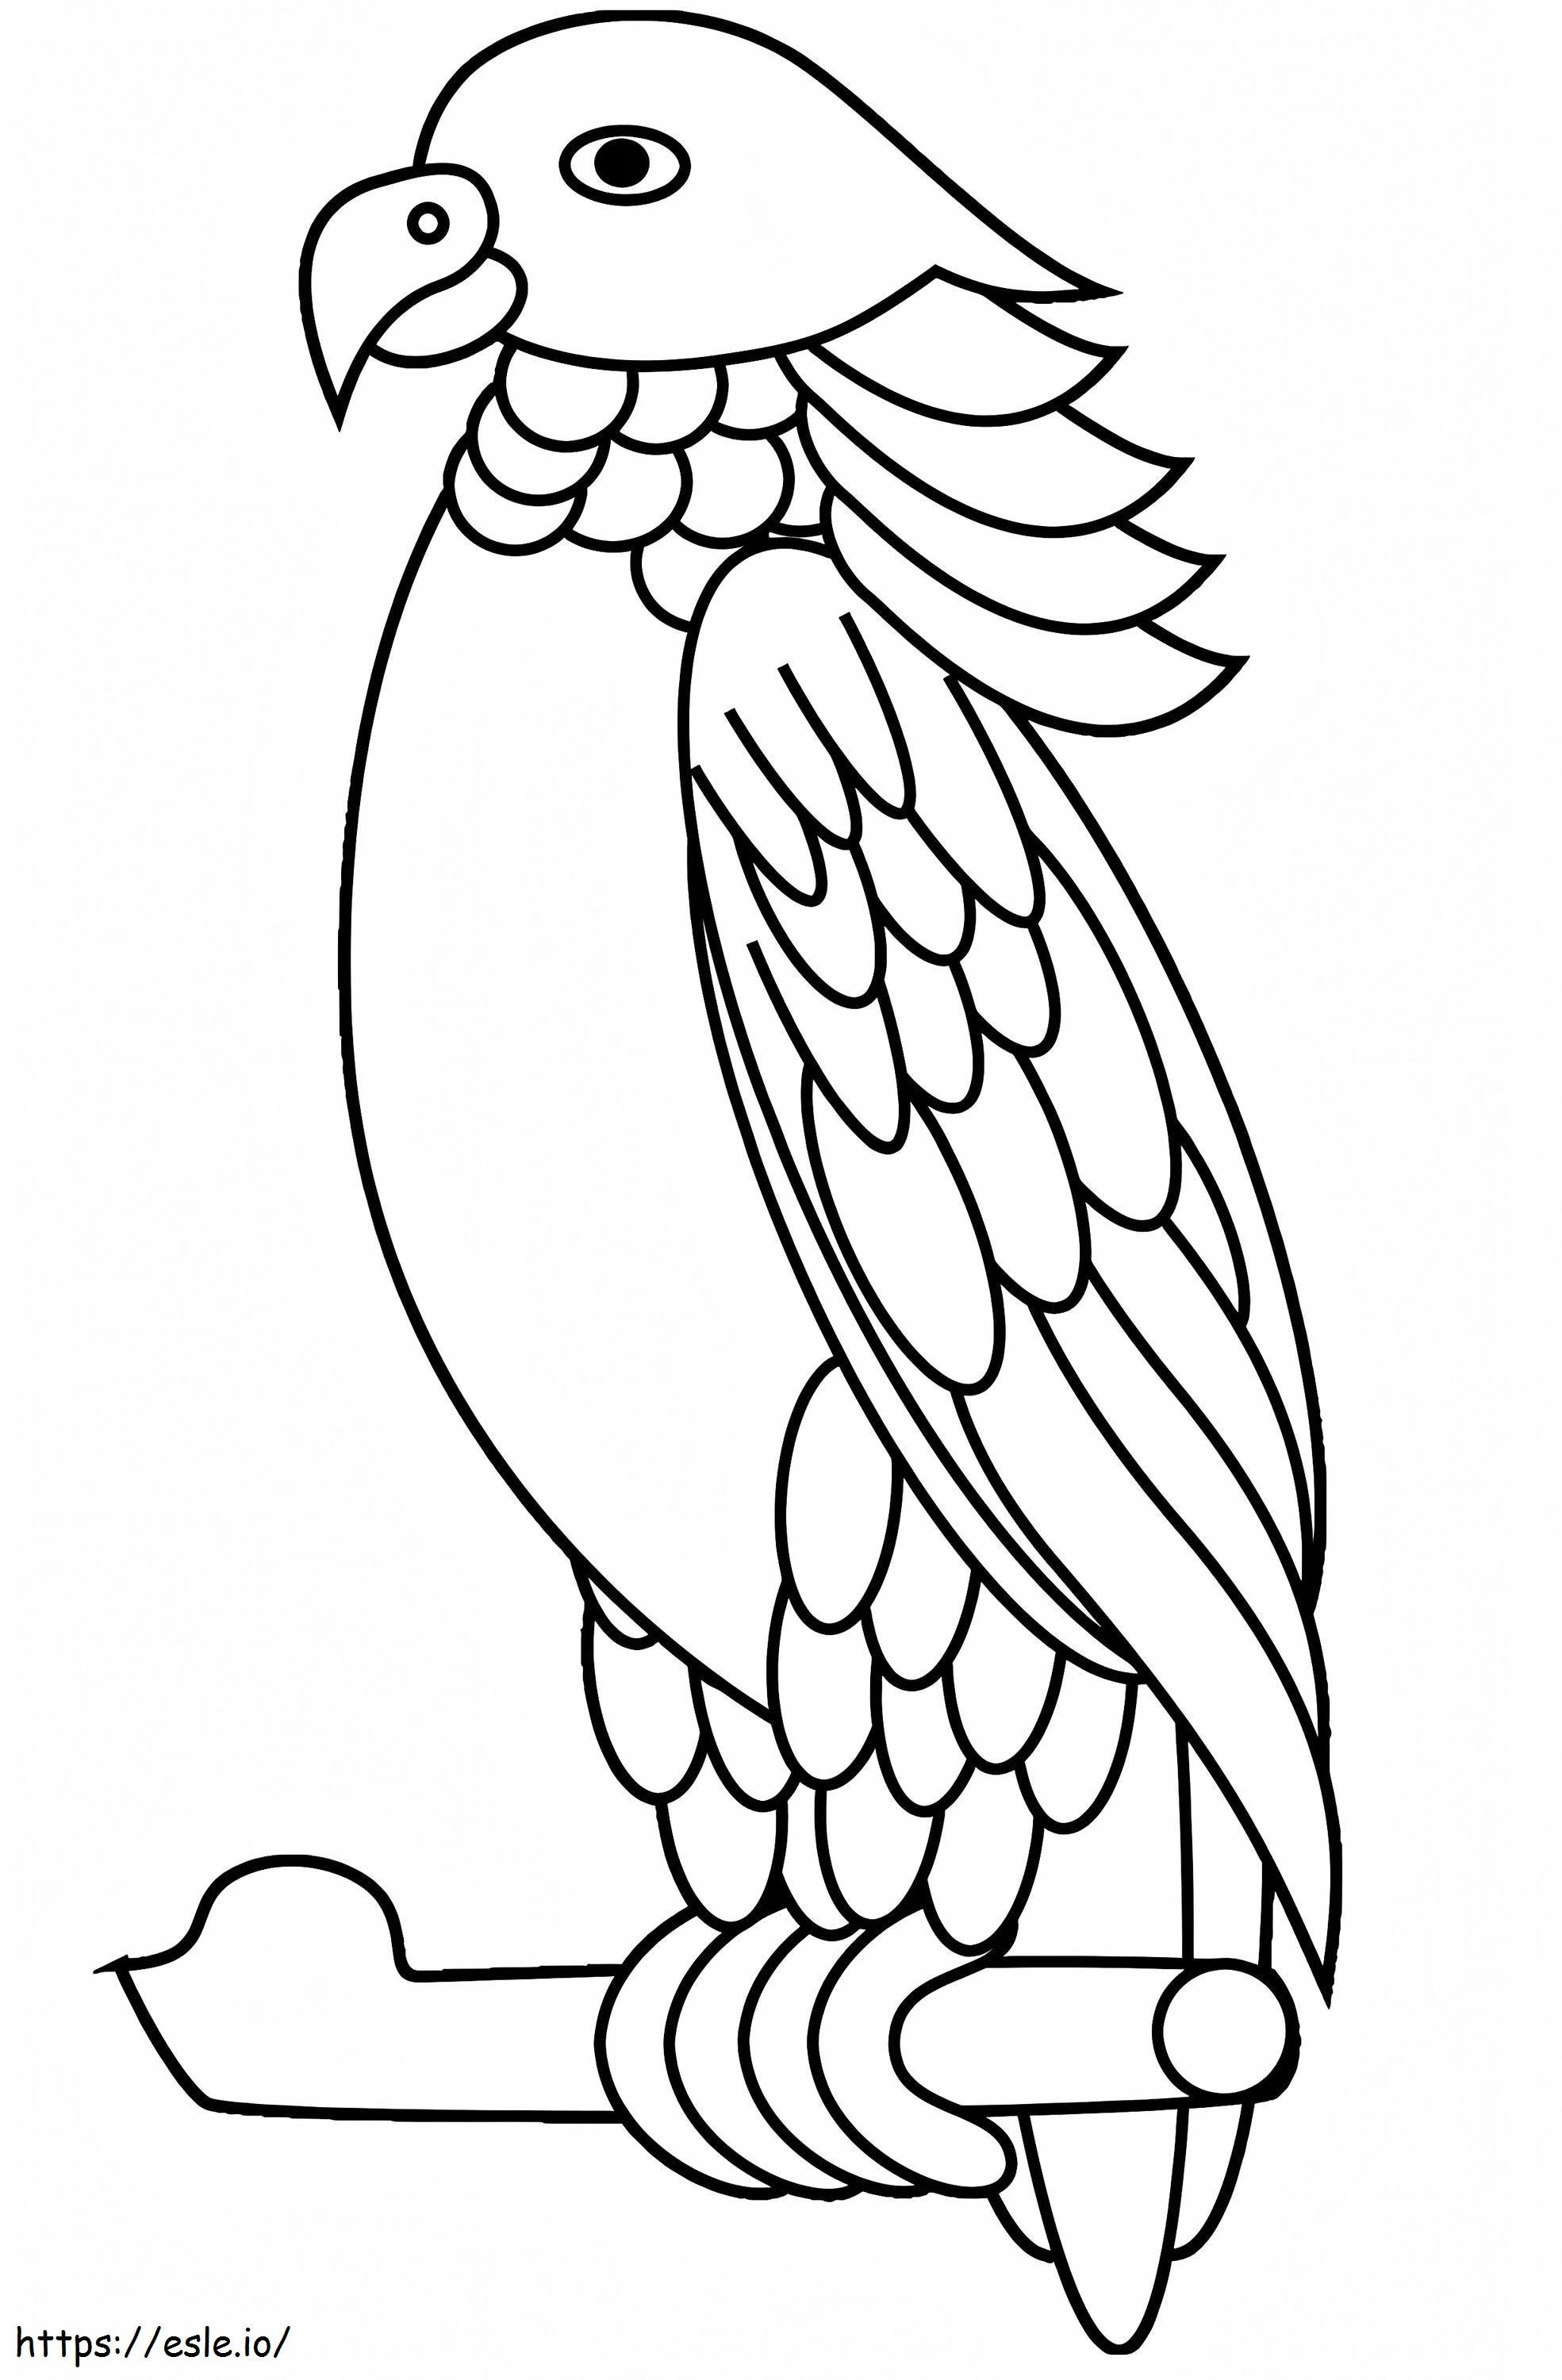 1560412729 Sisserou Parrot A4 coloring page